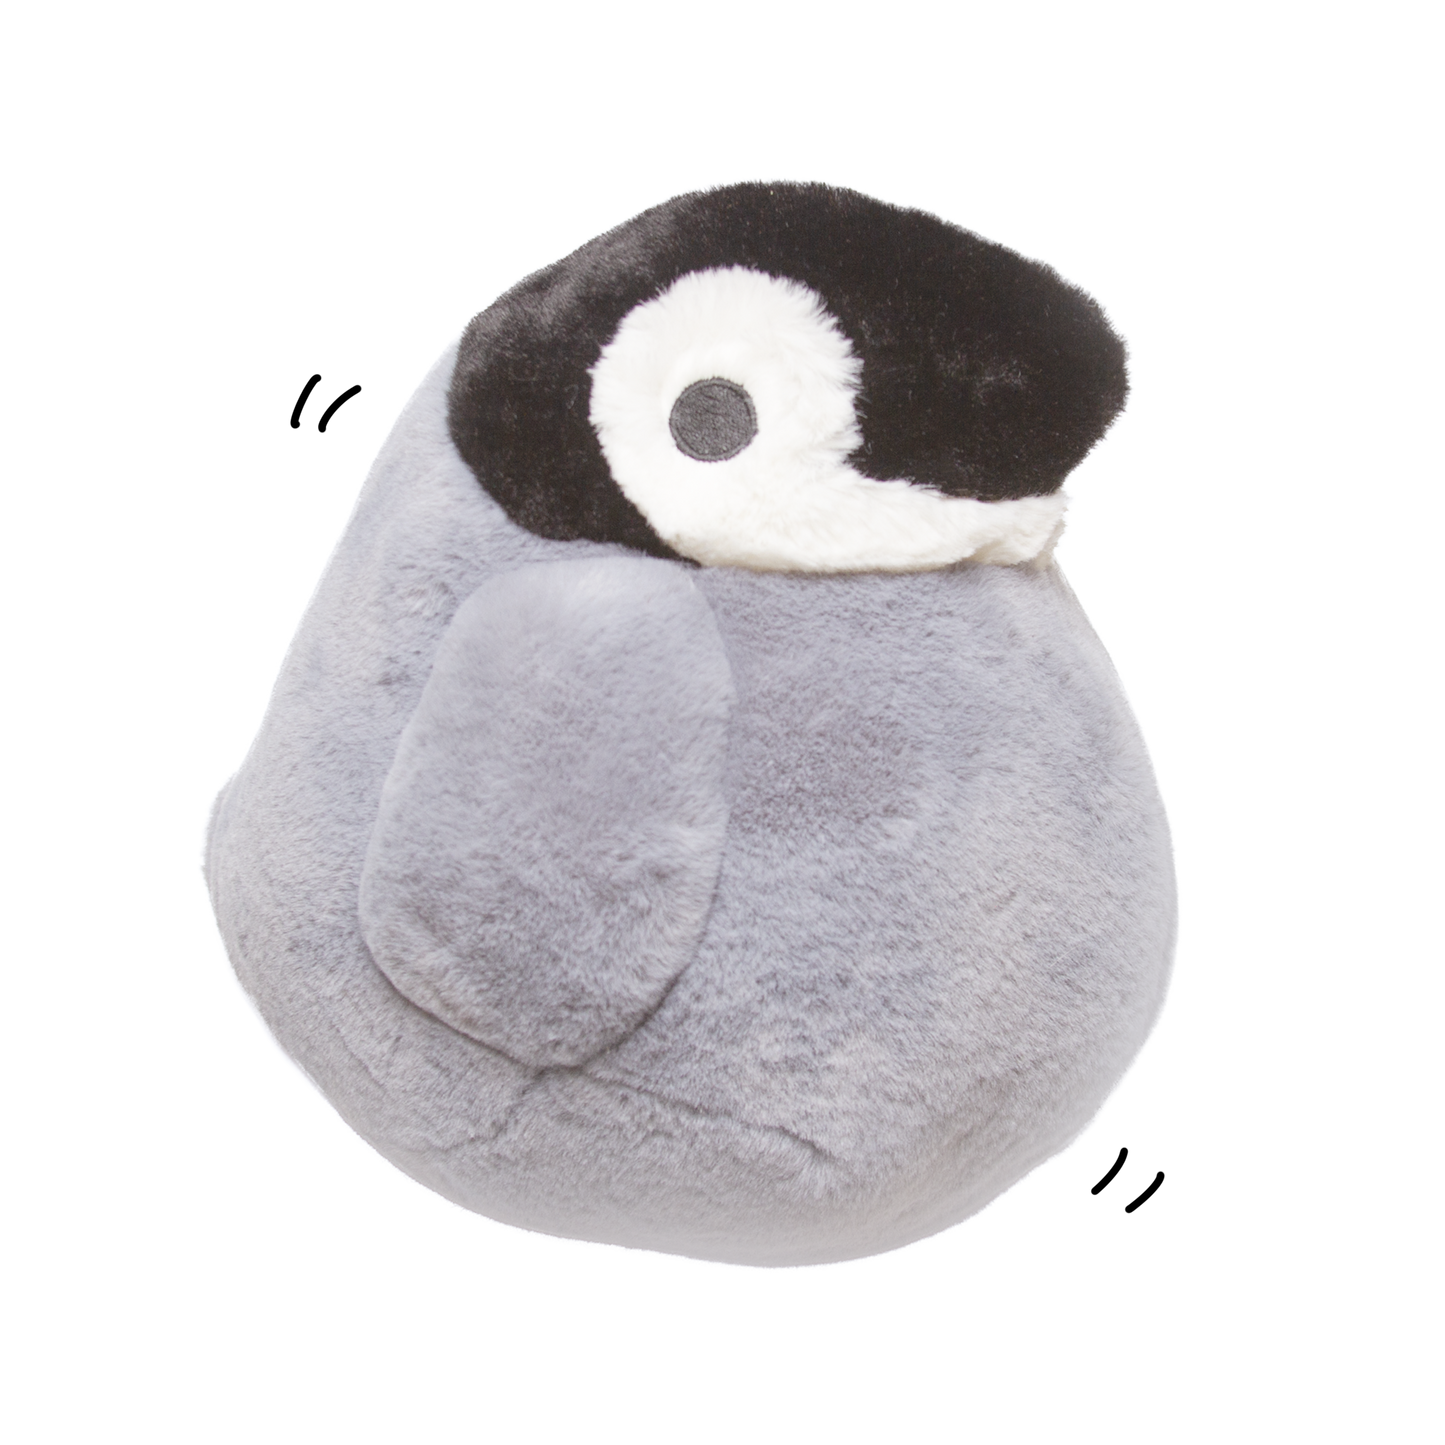 Pebble the Penguin